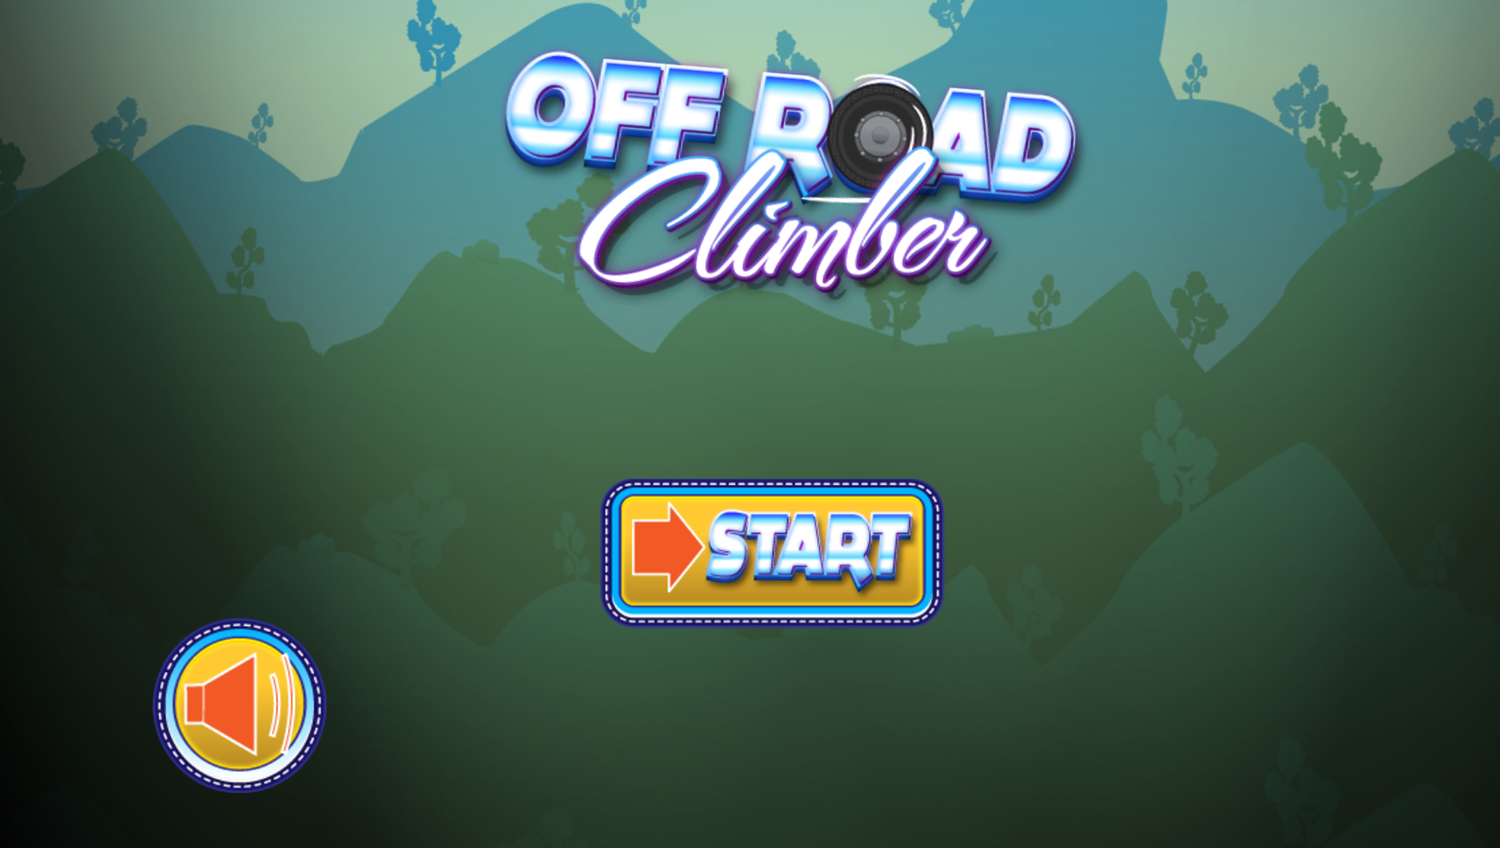 Off Road Climber Game Welcome Screen Screenshot.